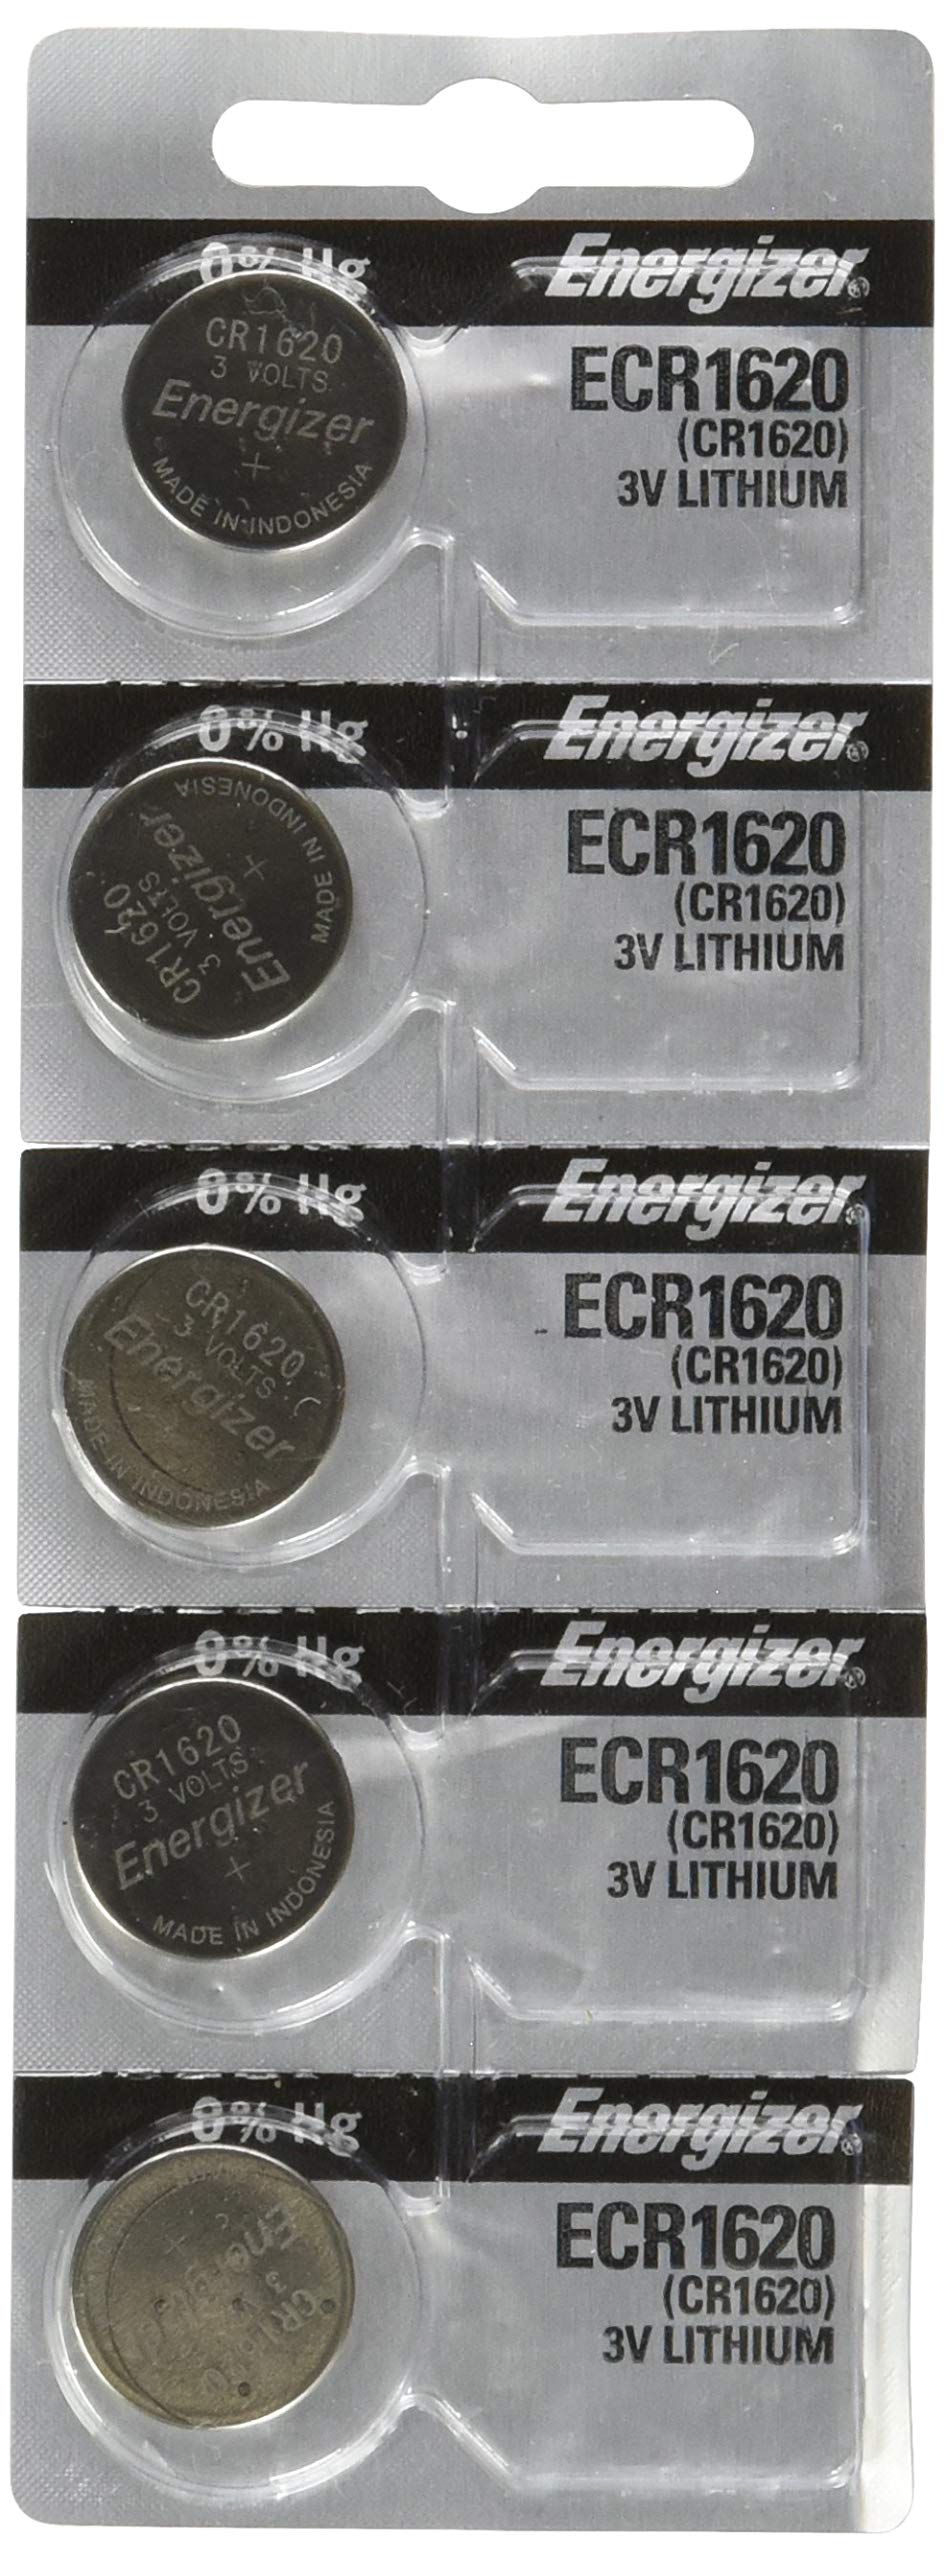 [Australia] - Energizer CR1620 Lithium Battery, 5-Pk 